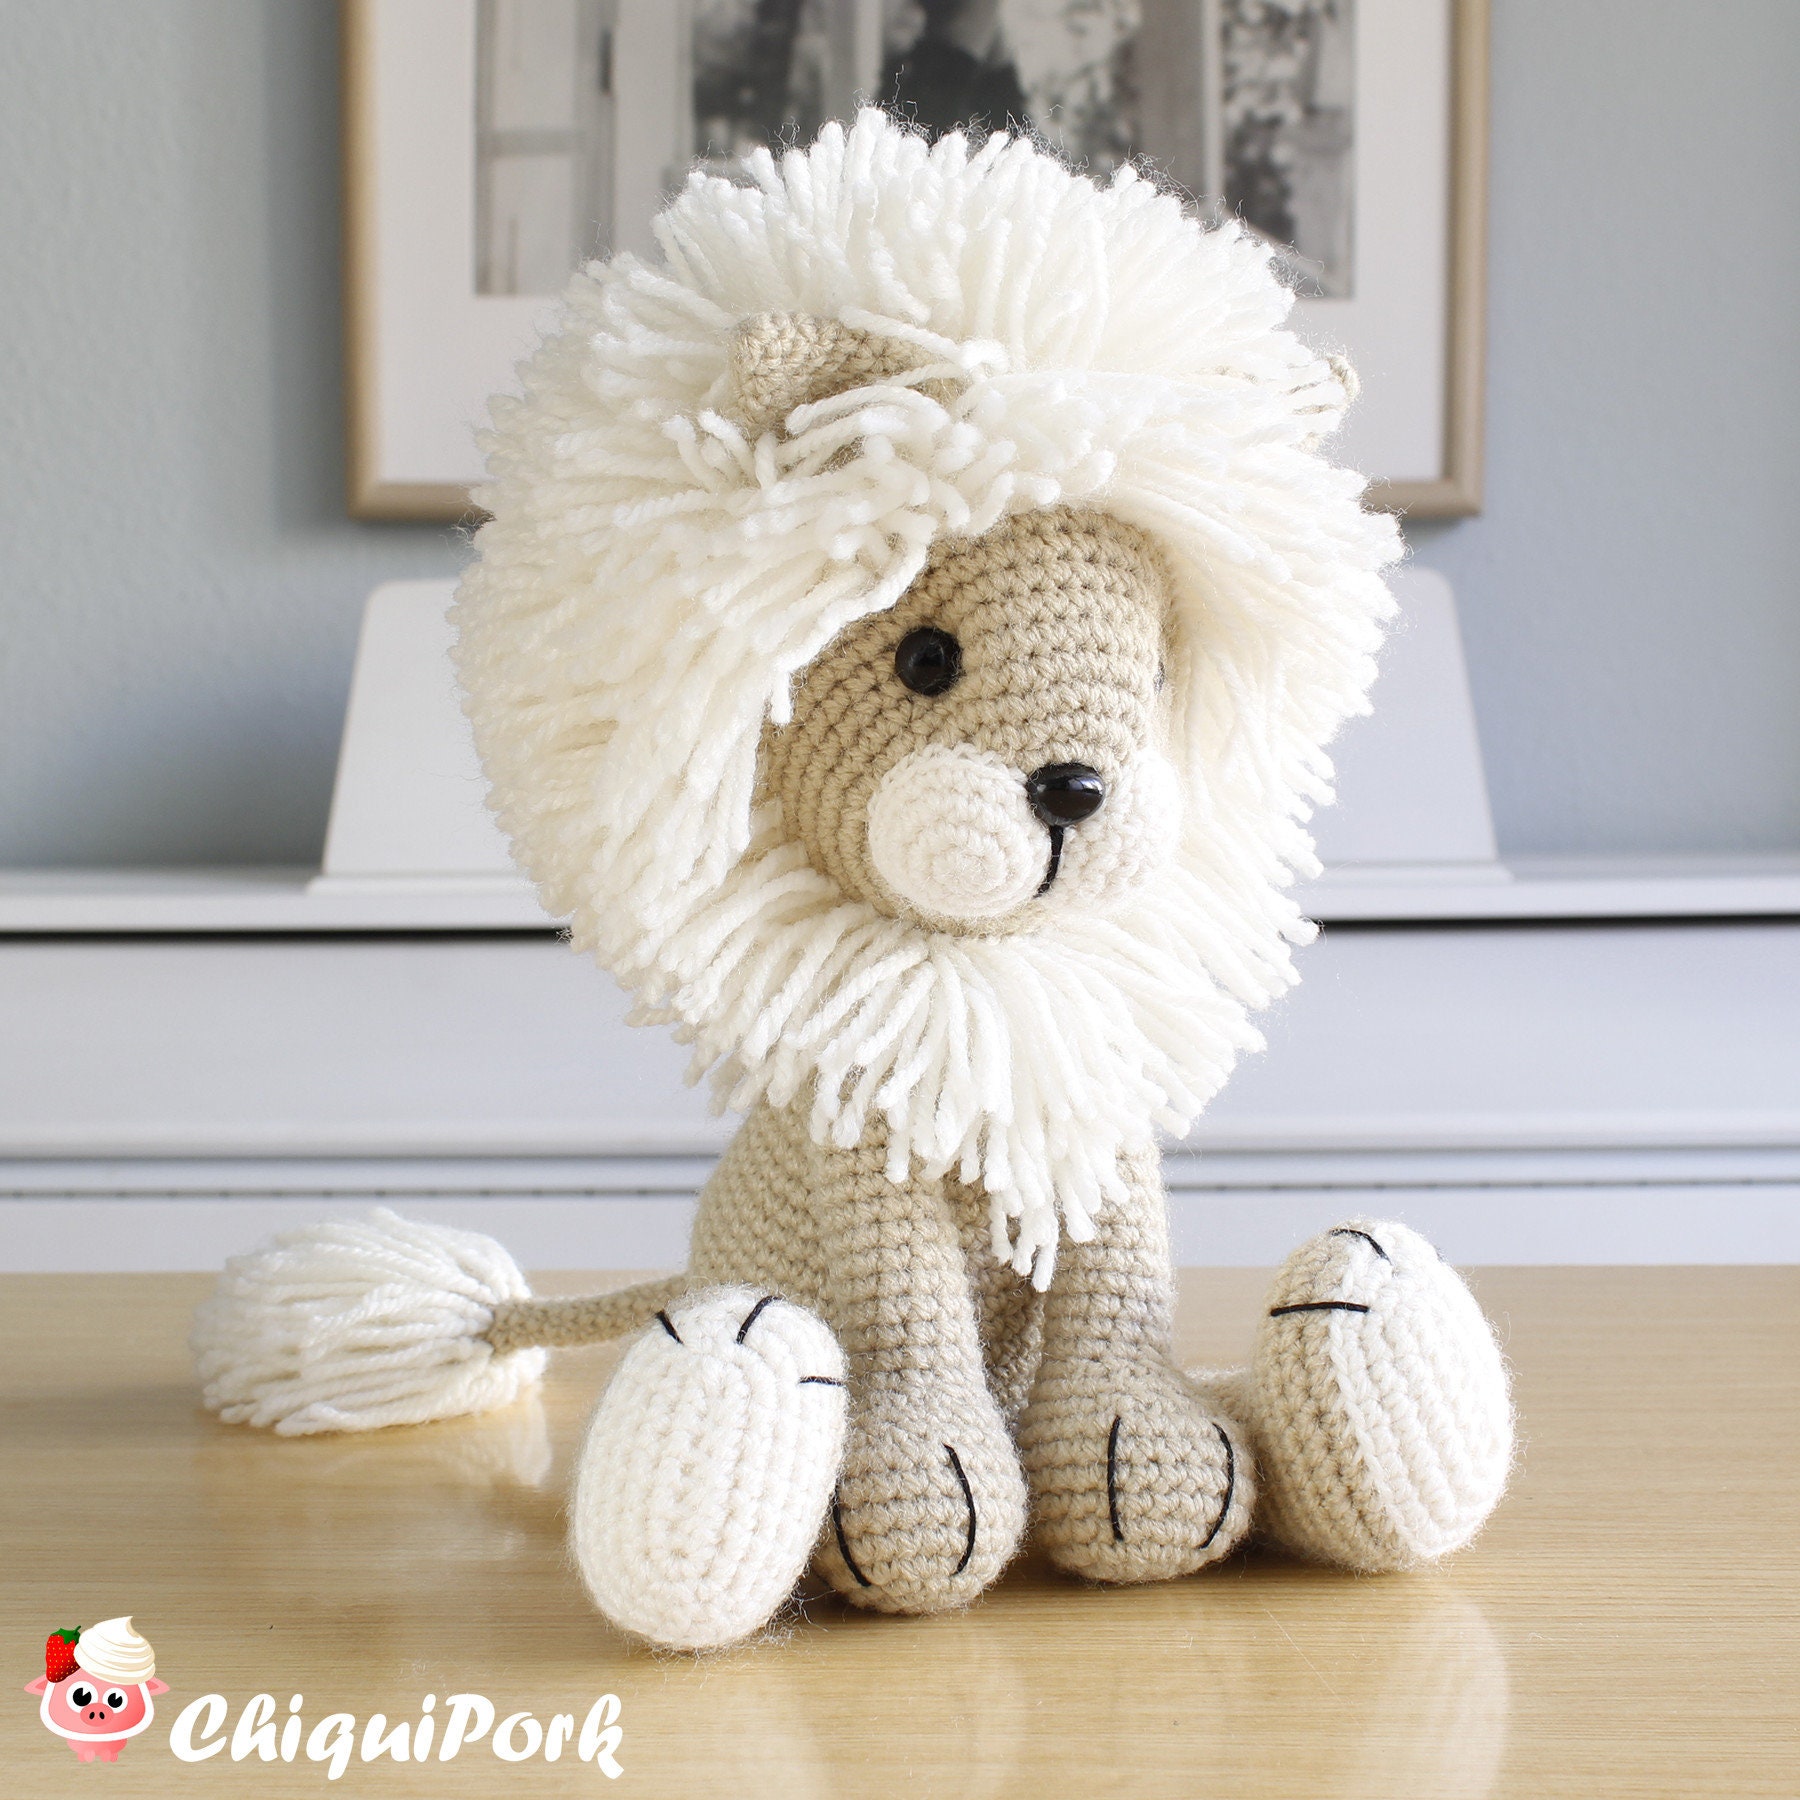 Crochet Lion toy lion plush stuffed animal baby boy toys | Etsy